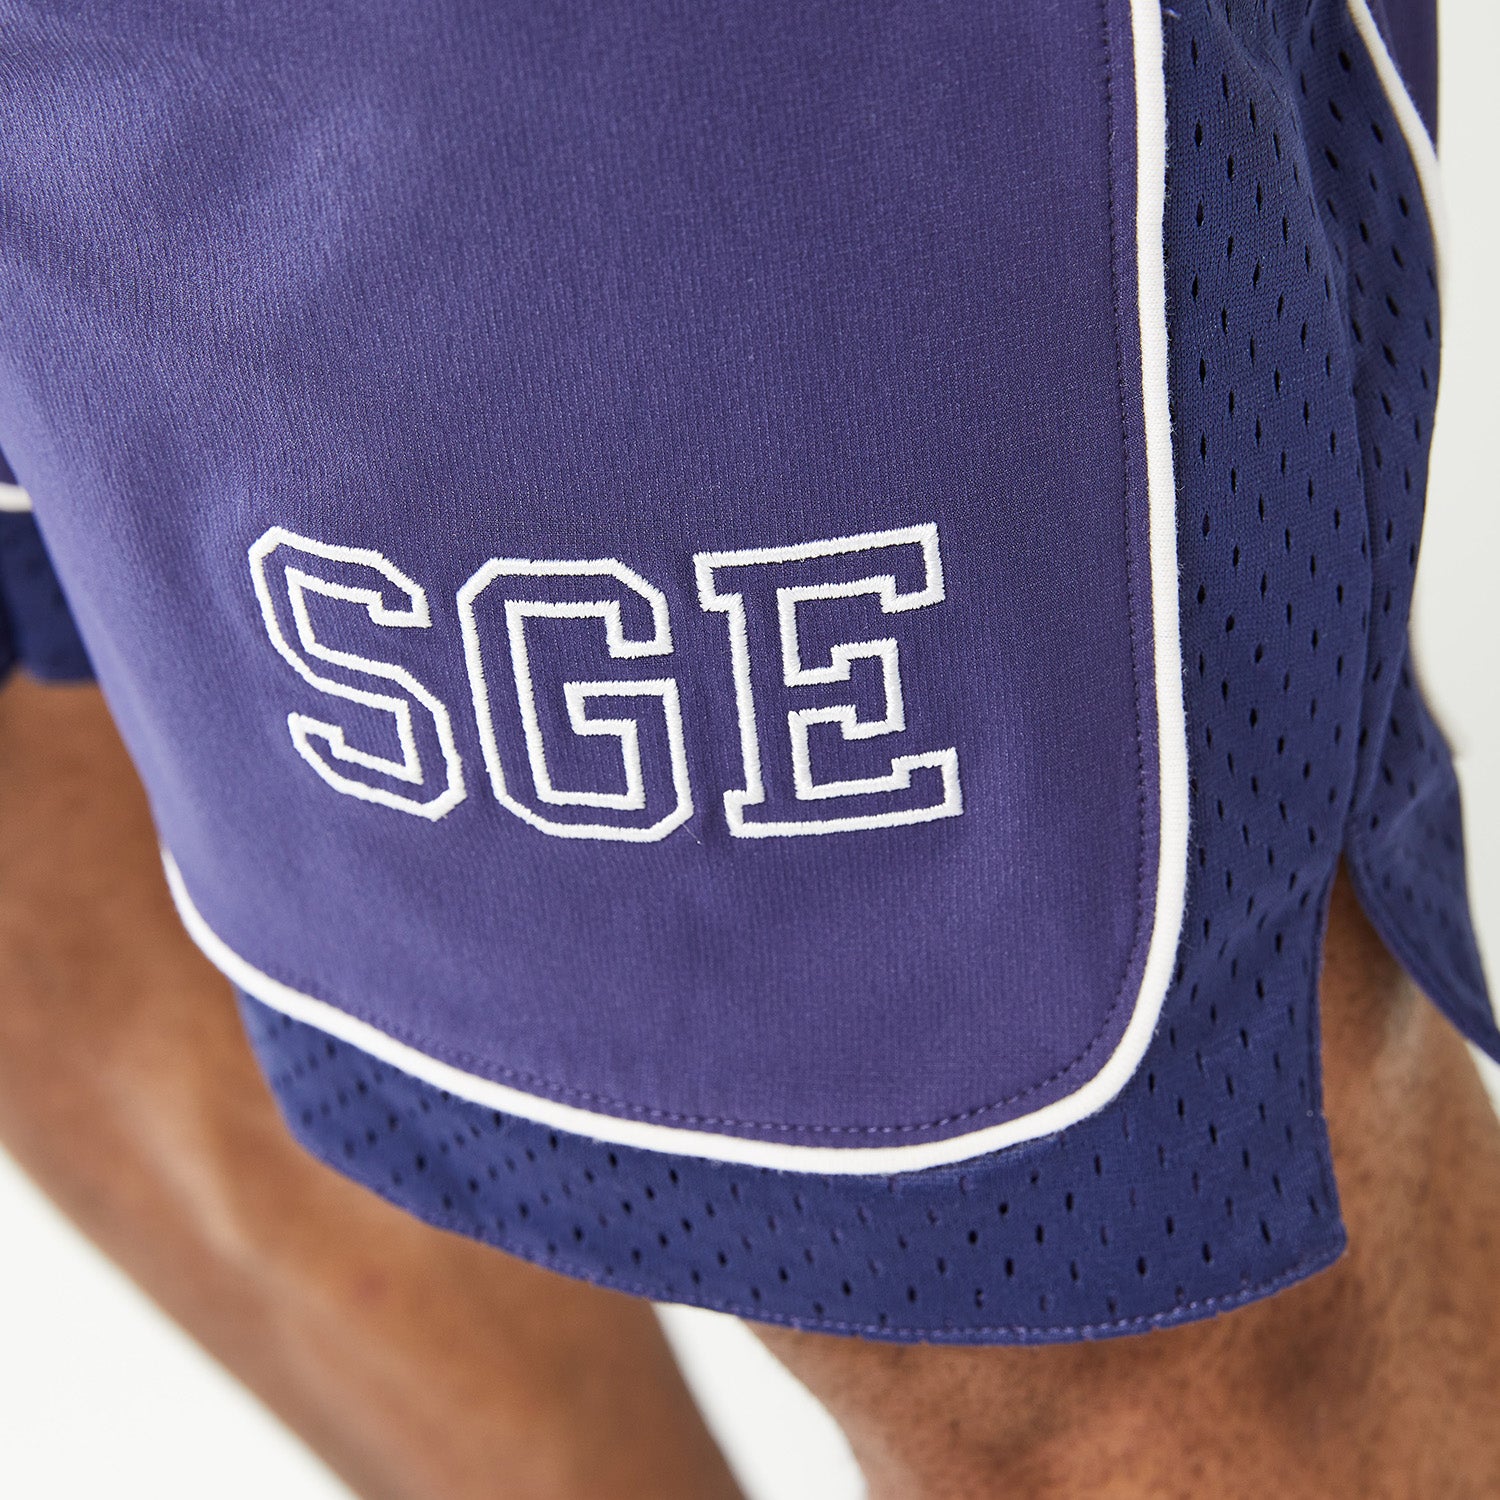 squatwolf-gym-wear-golden-era-basketball-shorts-blue-workout-shorts-for-men